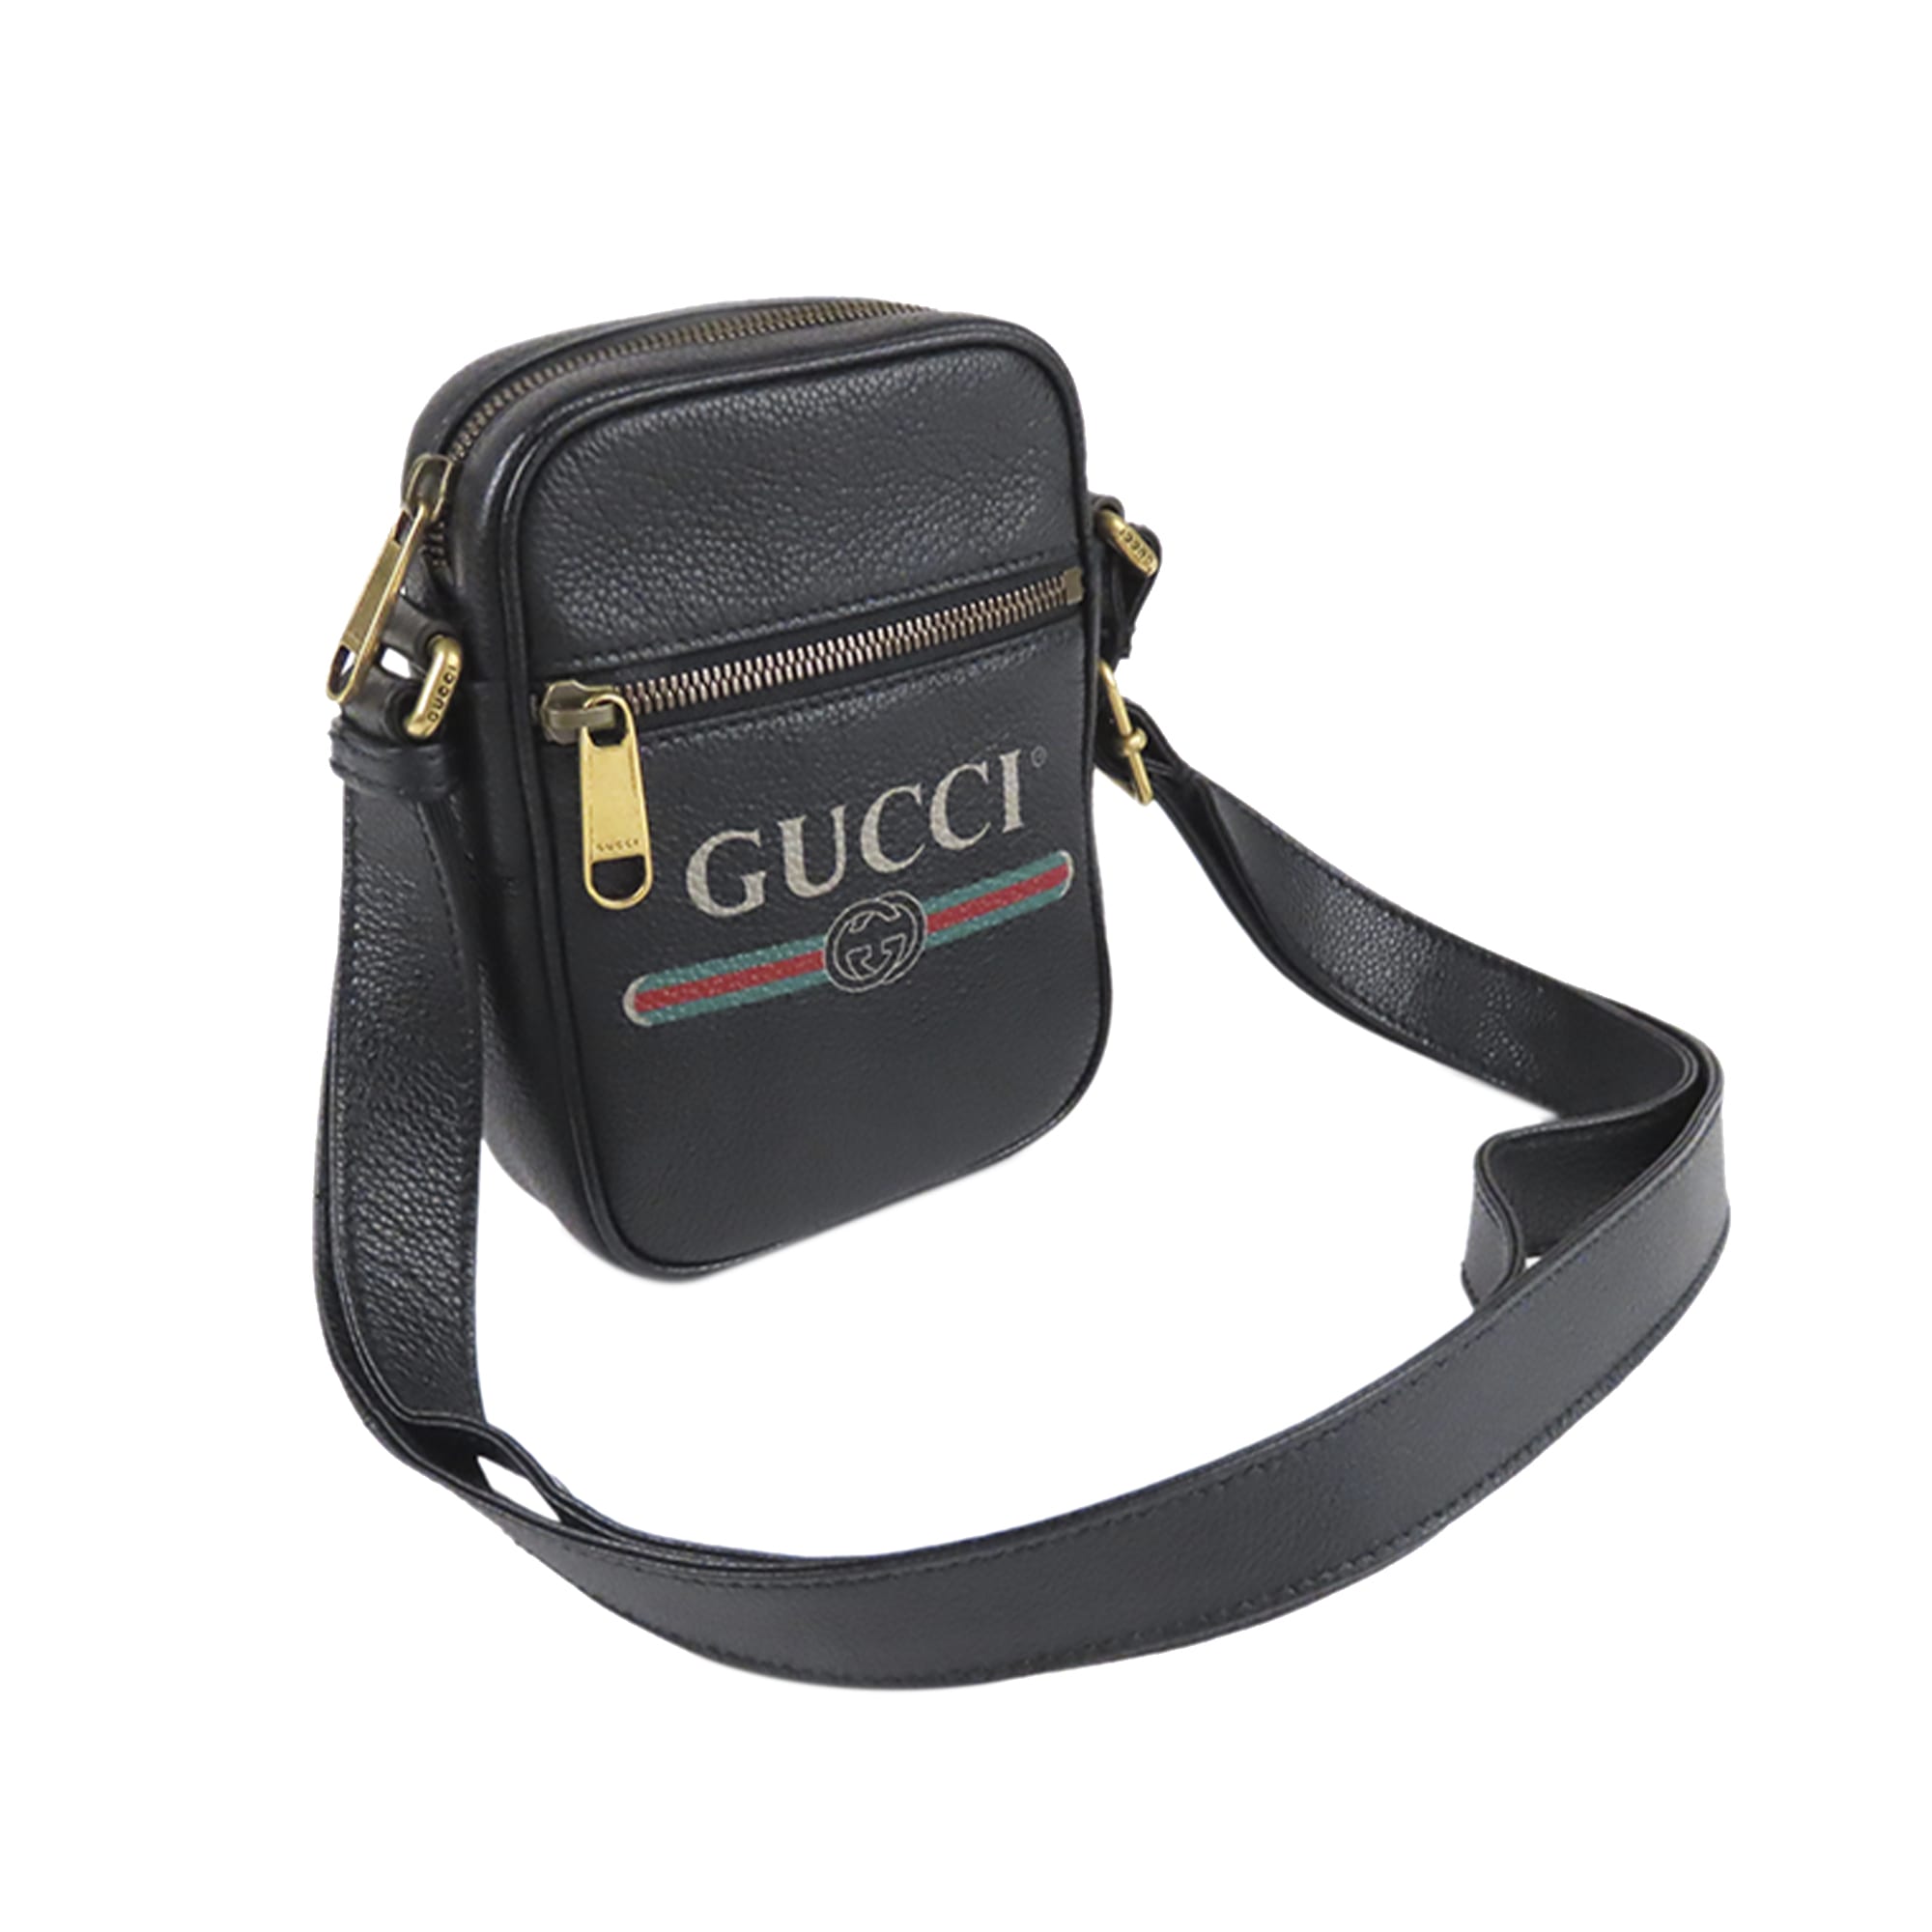 Gucci Logo Leather Crossbody Bag, ONESIZE, black